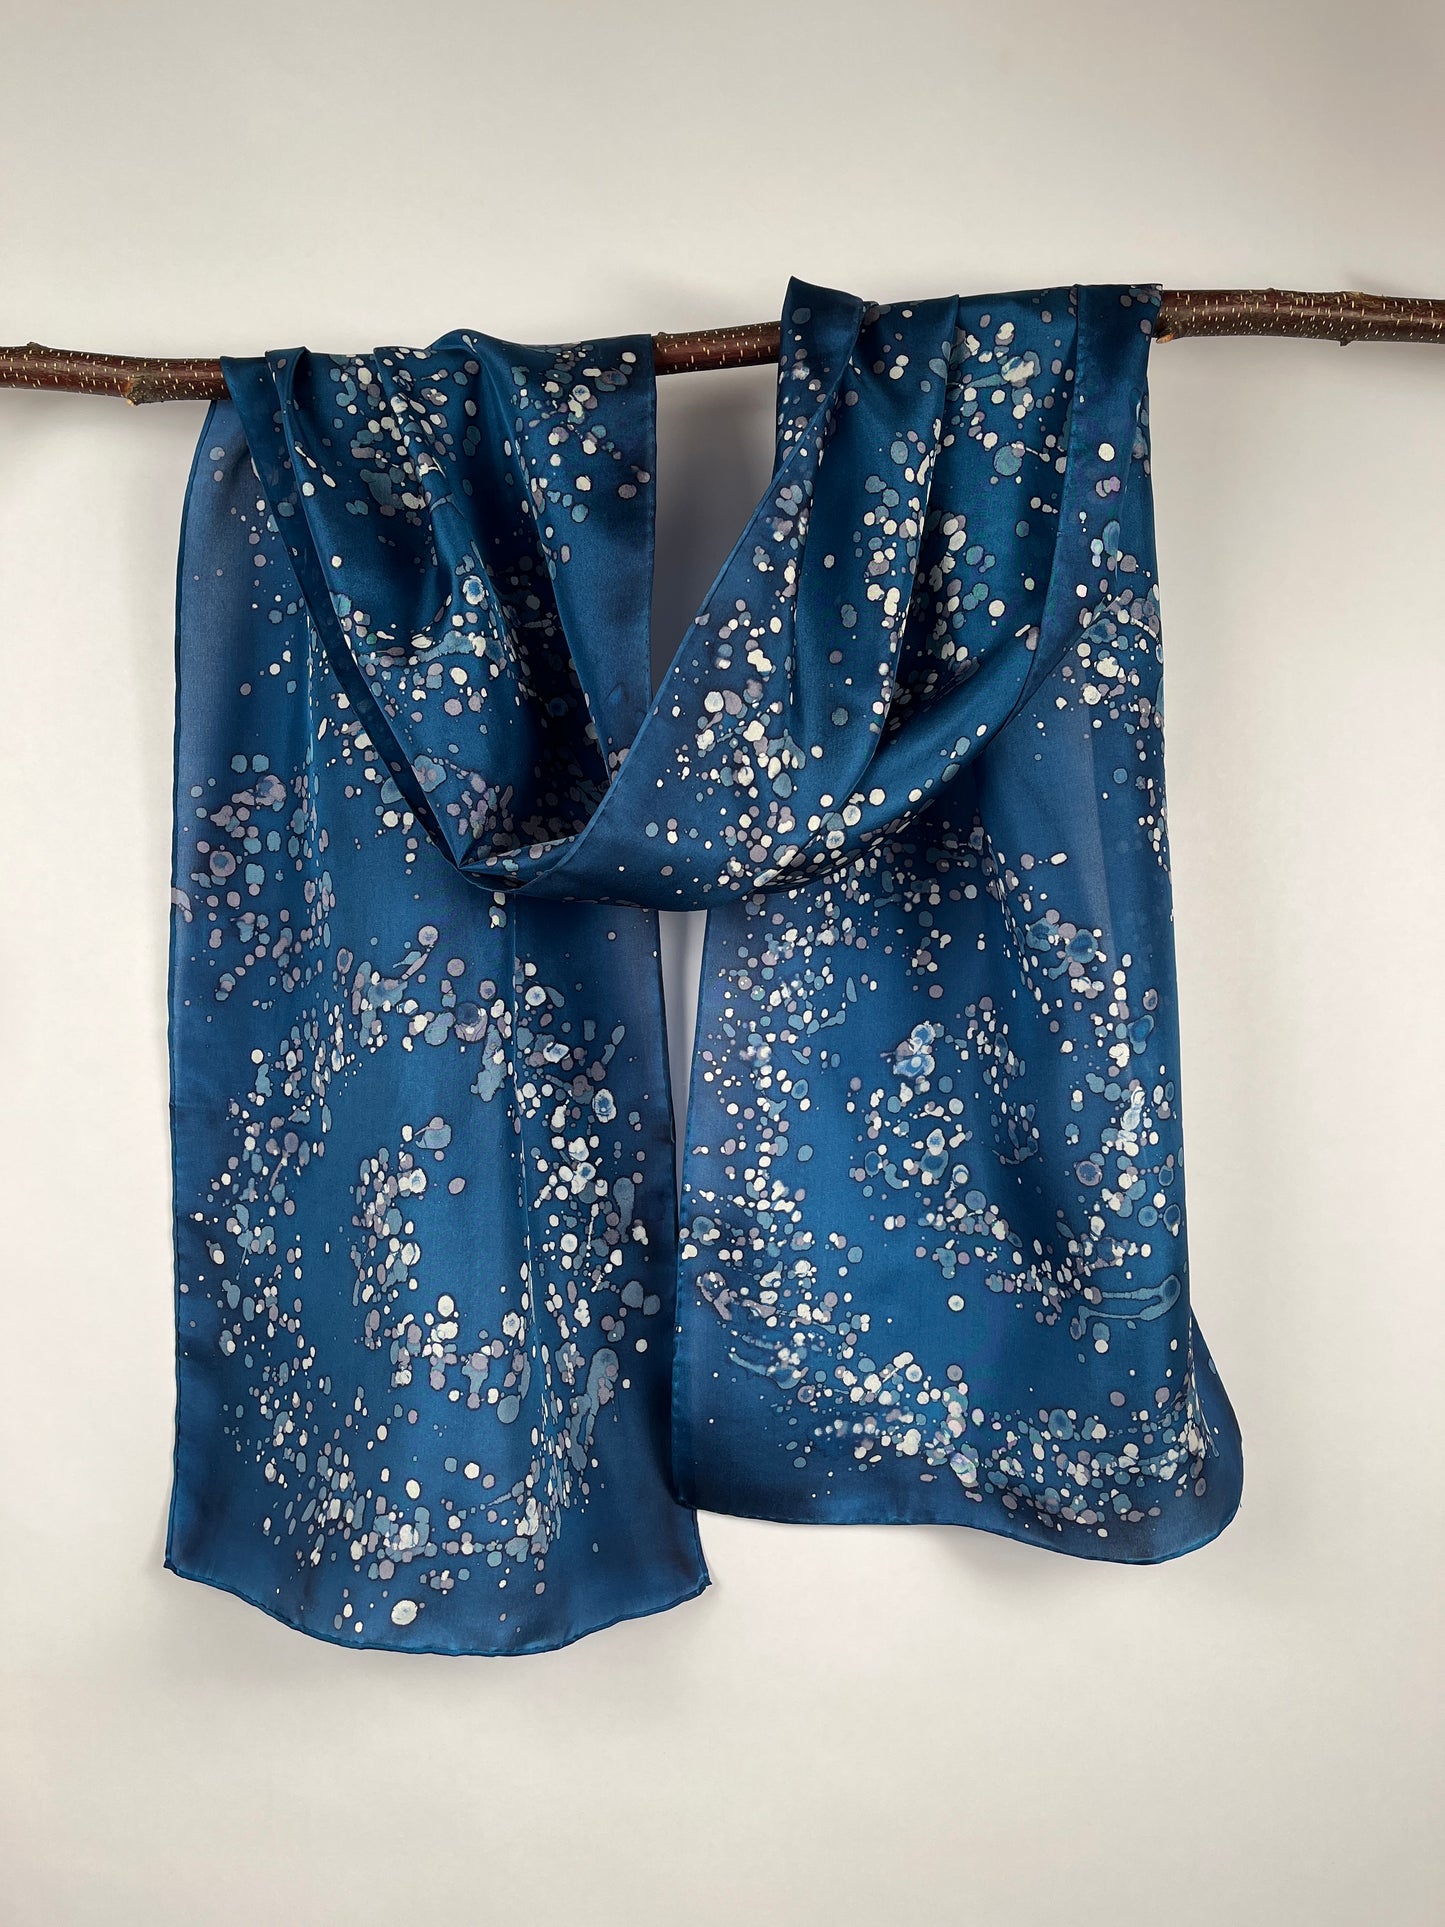 “Stormy Seas” - Hand-dyed Silk Scarf - $125